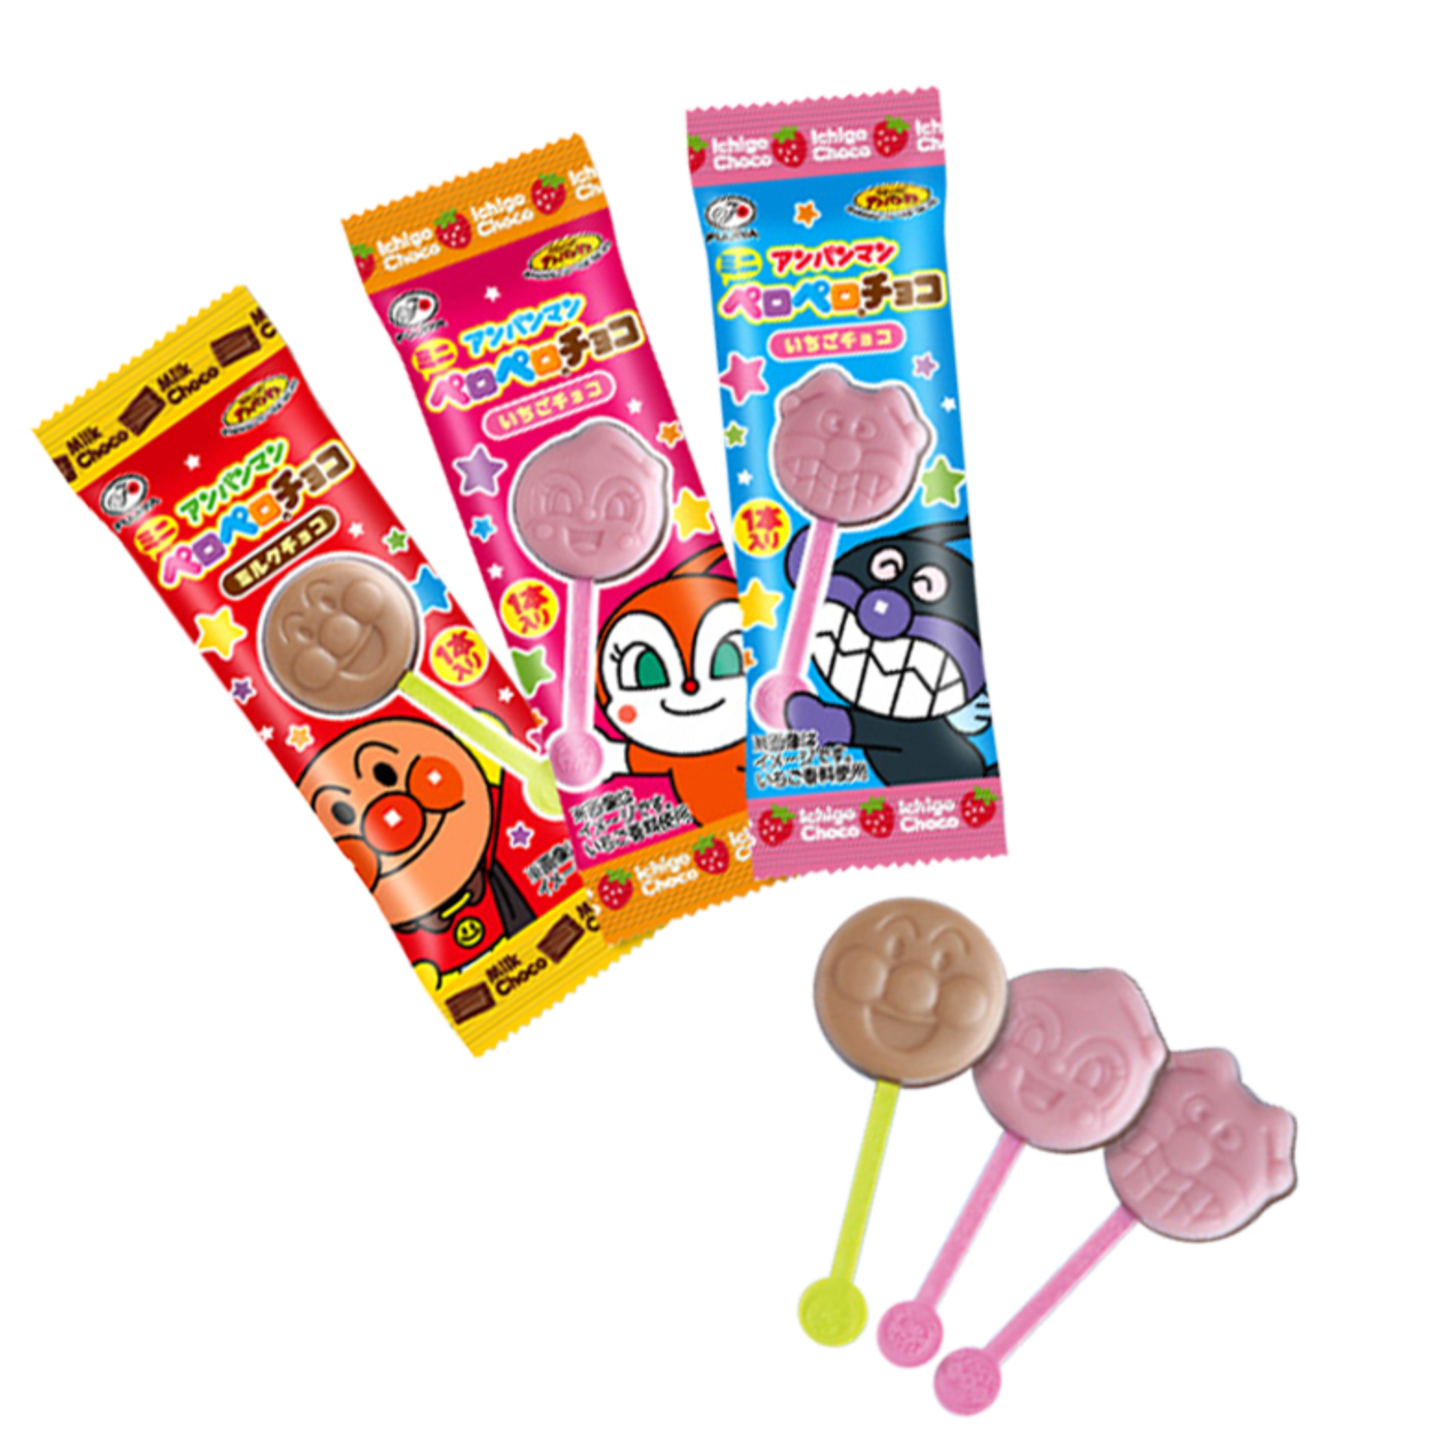 Fujiya Anpanman Chocolate Lollipop不二家面包超人牛奶巧克力&草莓巧克力棒棒糖10支装 5gx10pcs